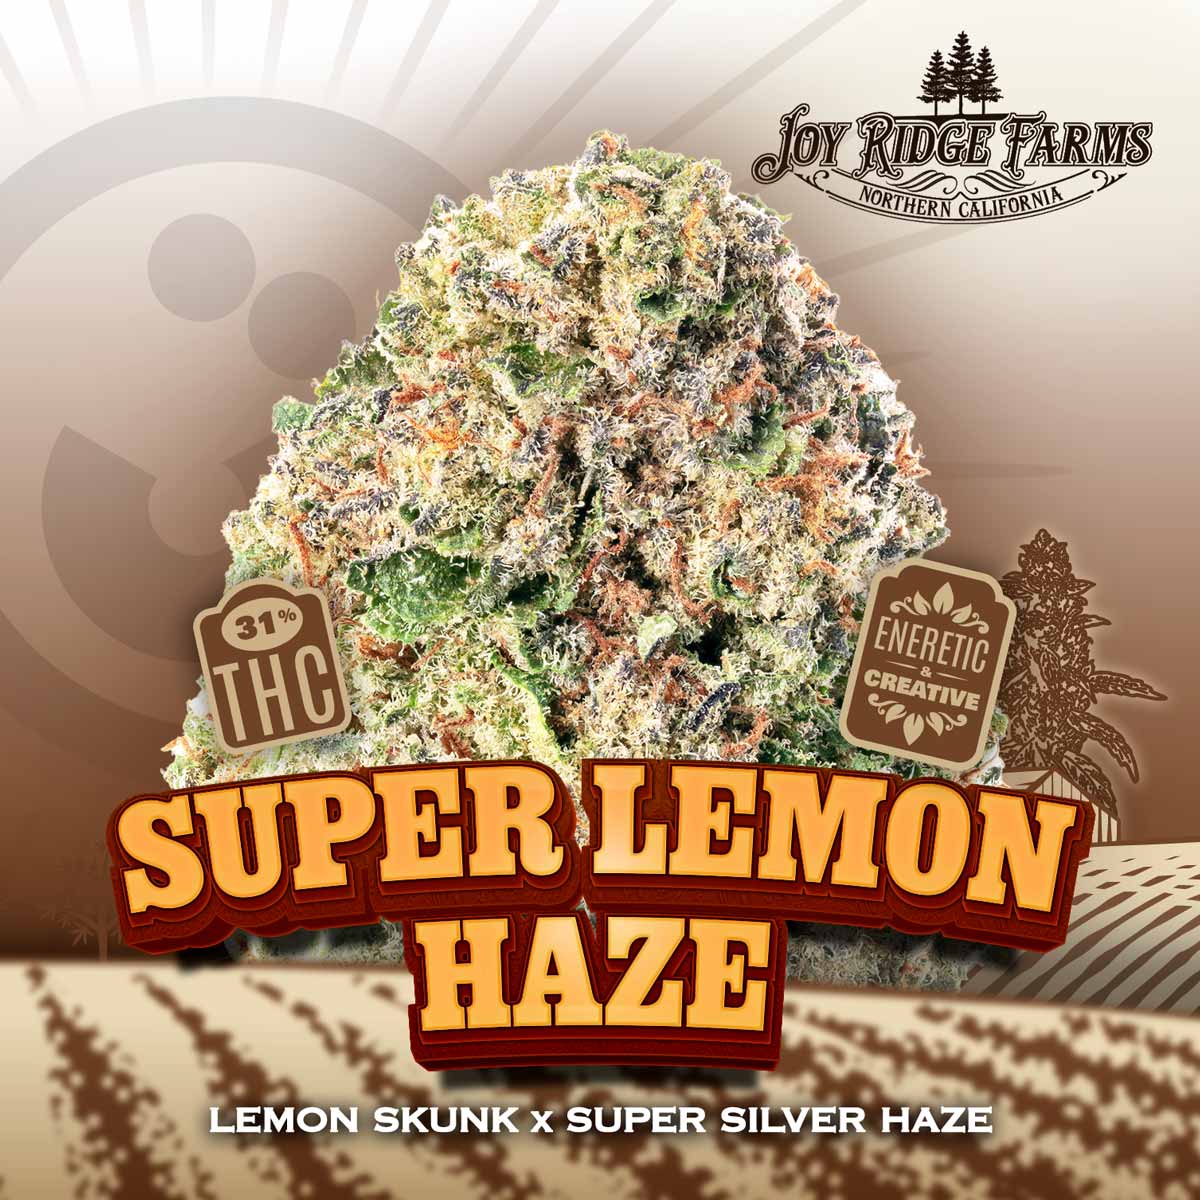 Joy Ridge Farms - Super Lemon Haze Flower 28g